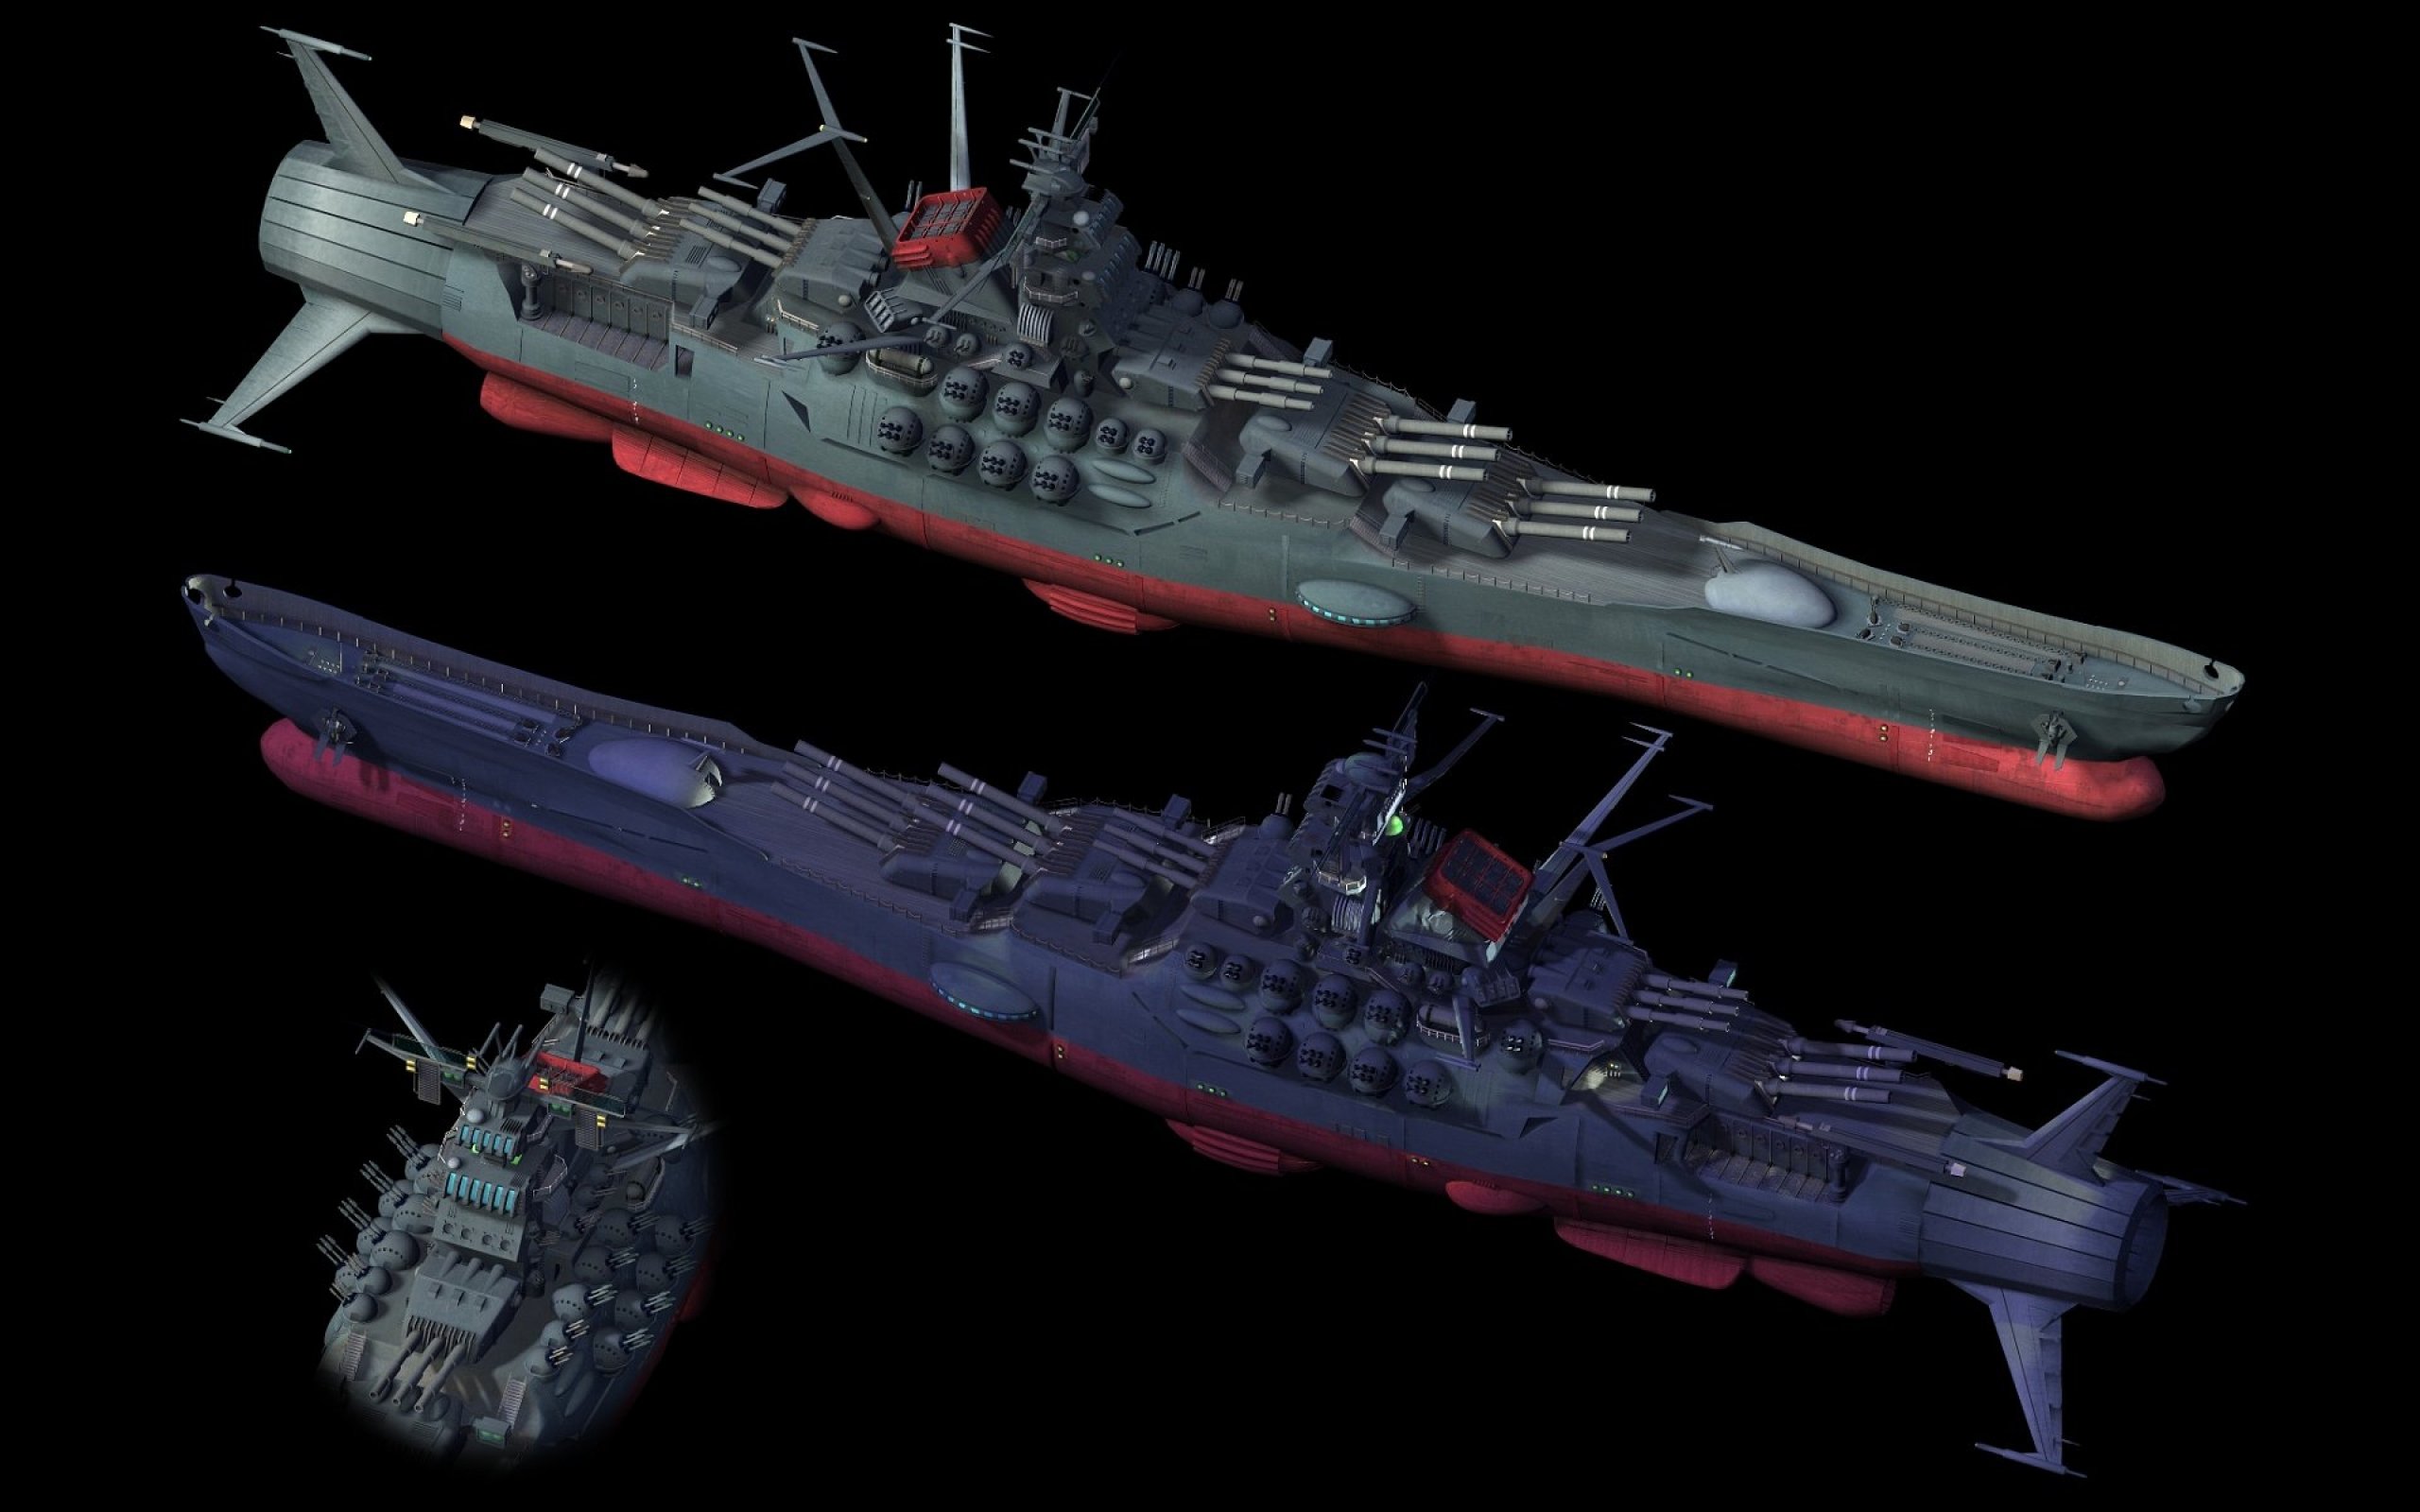 Anime Sci Fi Science Fiction Futuristic Spaceship Ship Boat D